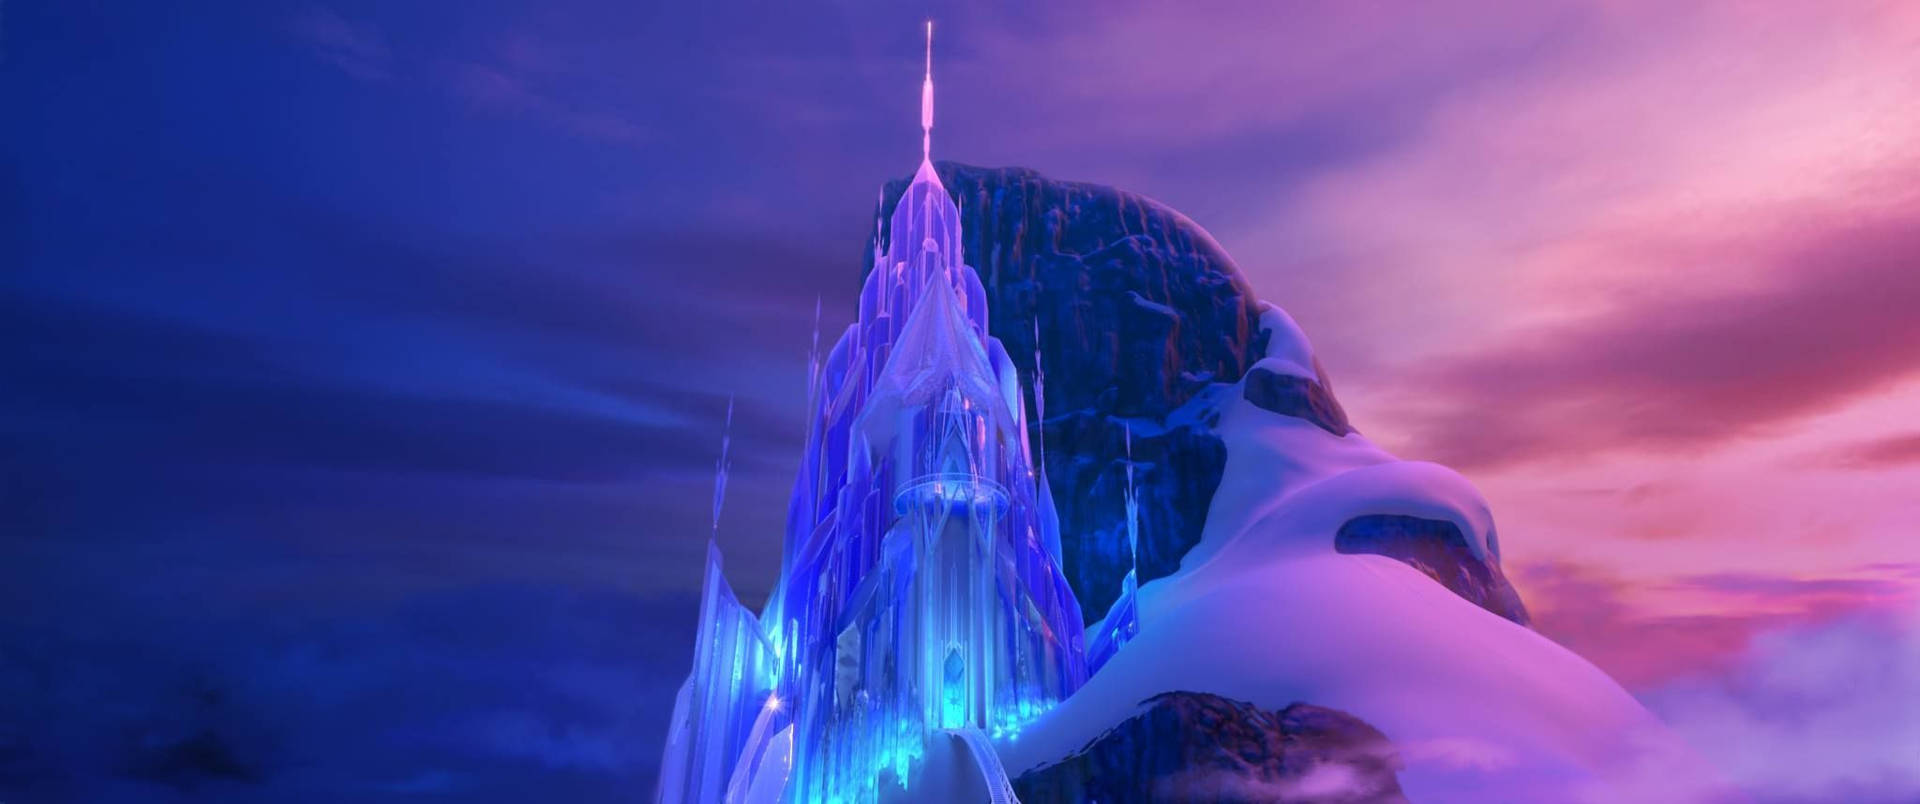 Frozen Castle On Cliff Wallpaper